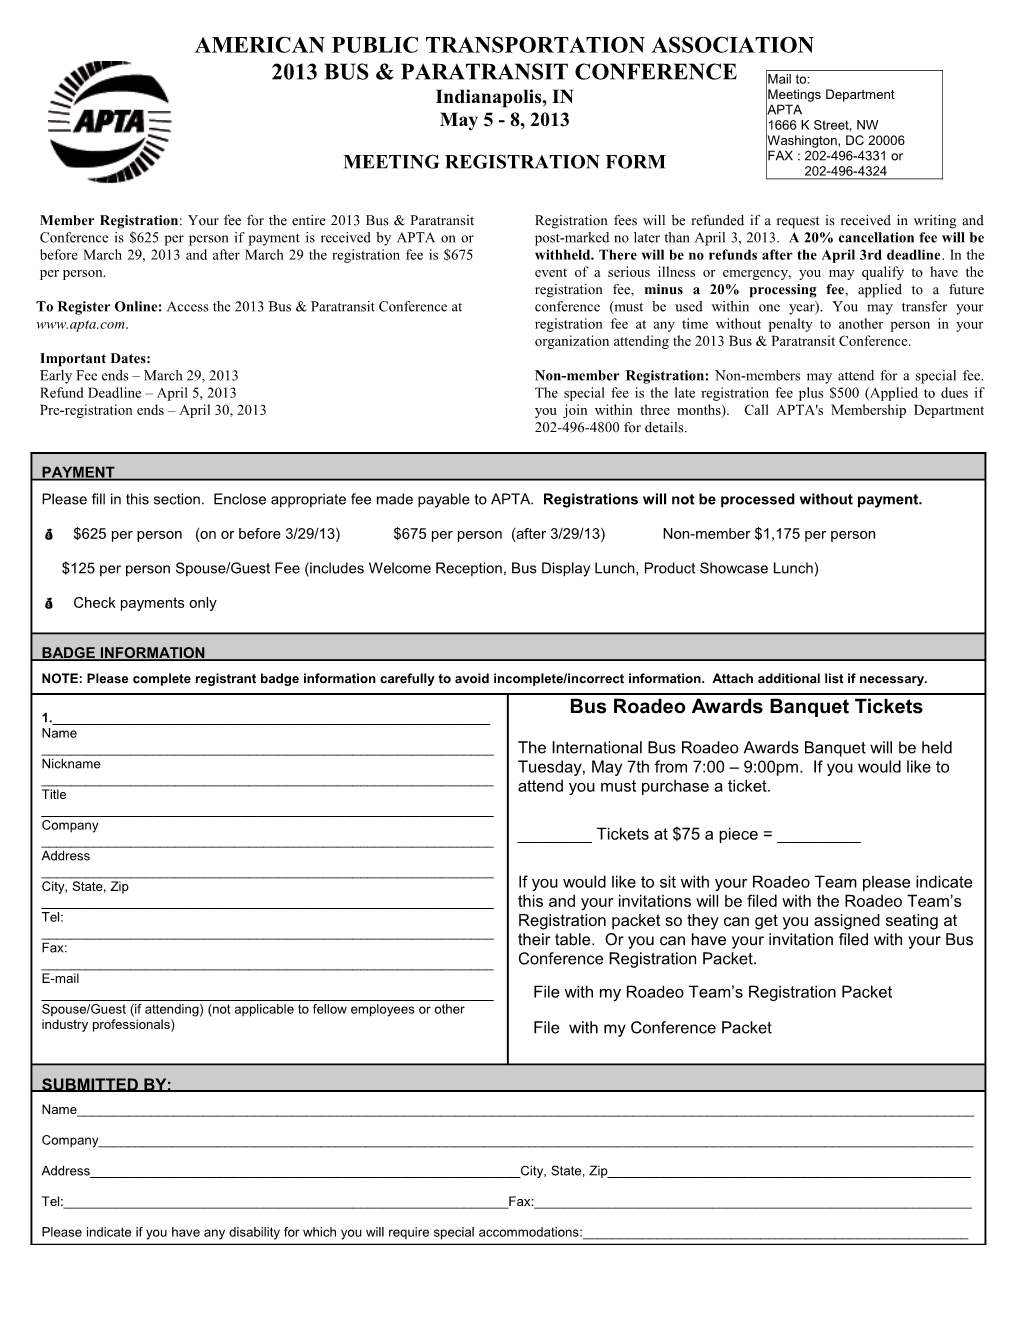 APTA 2013 Bus & Paratransit Conference Registration Form